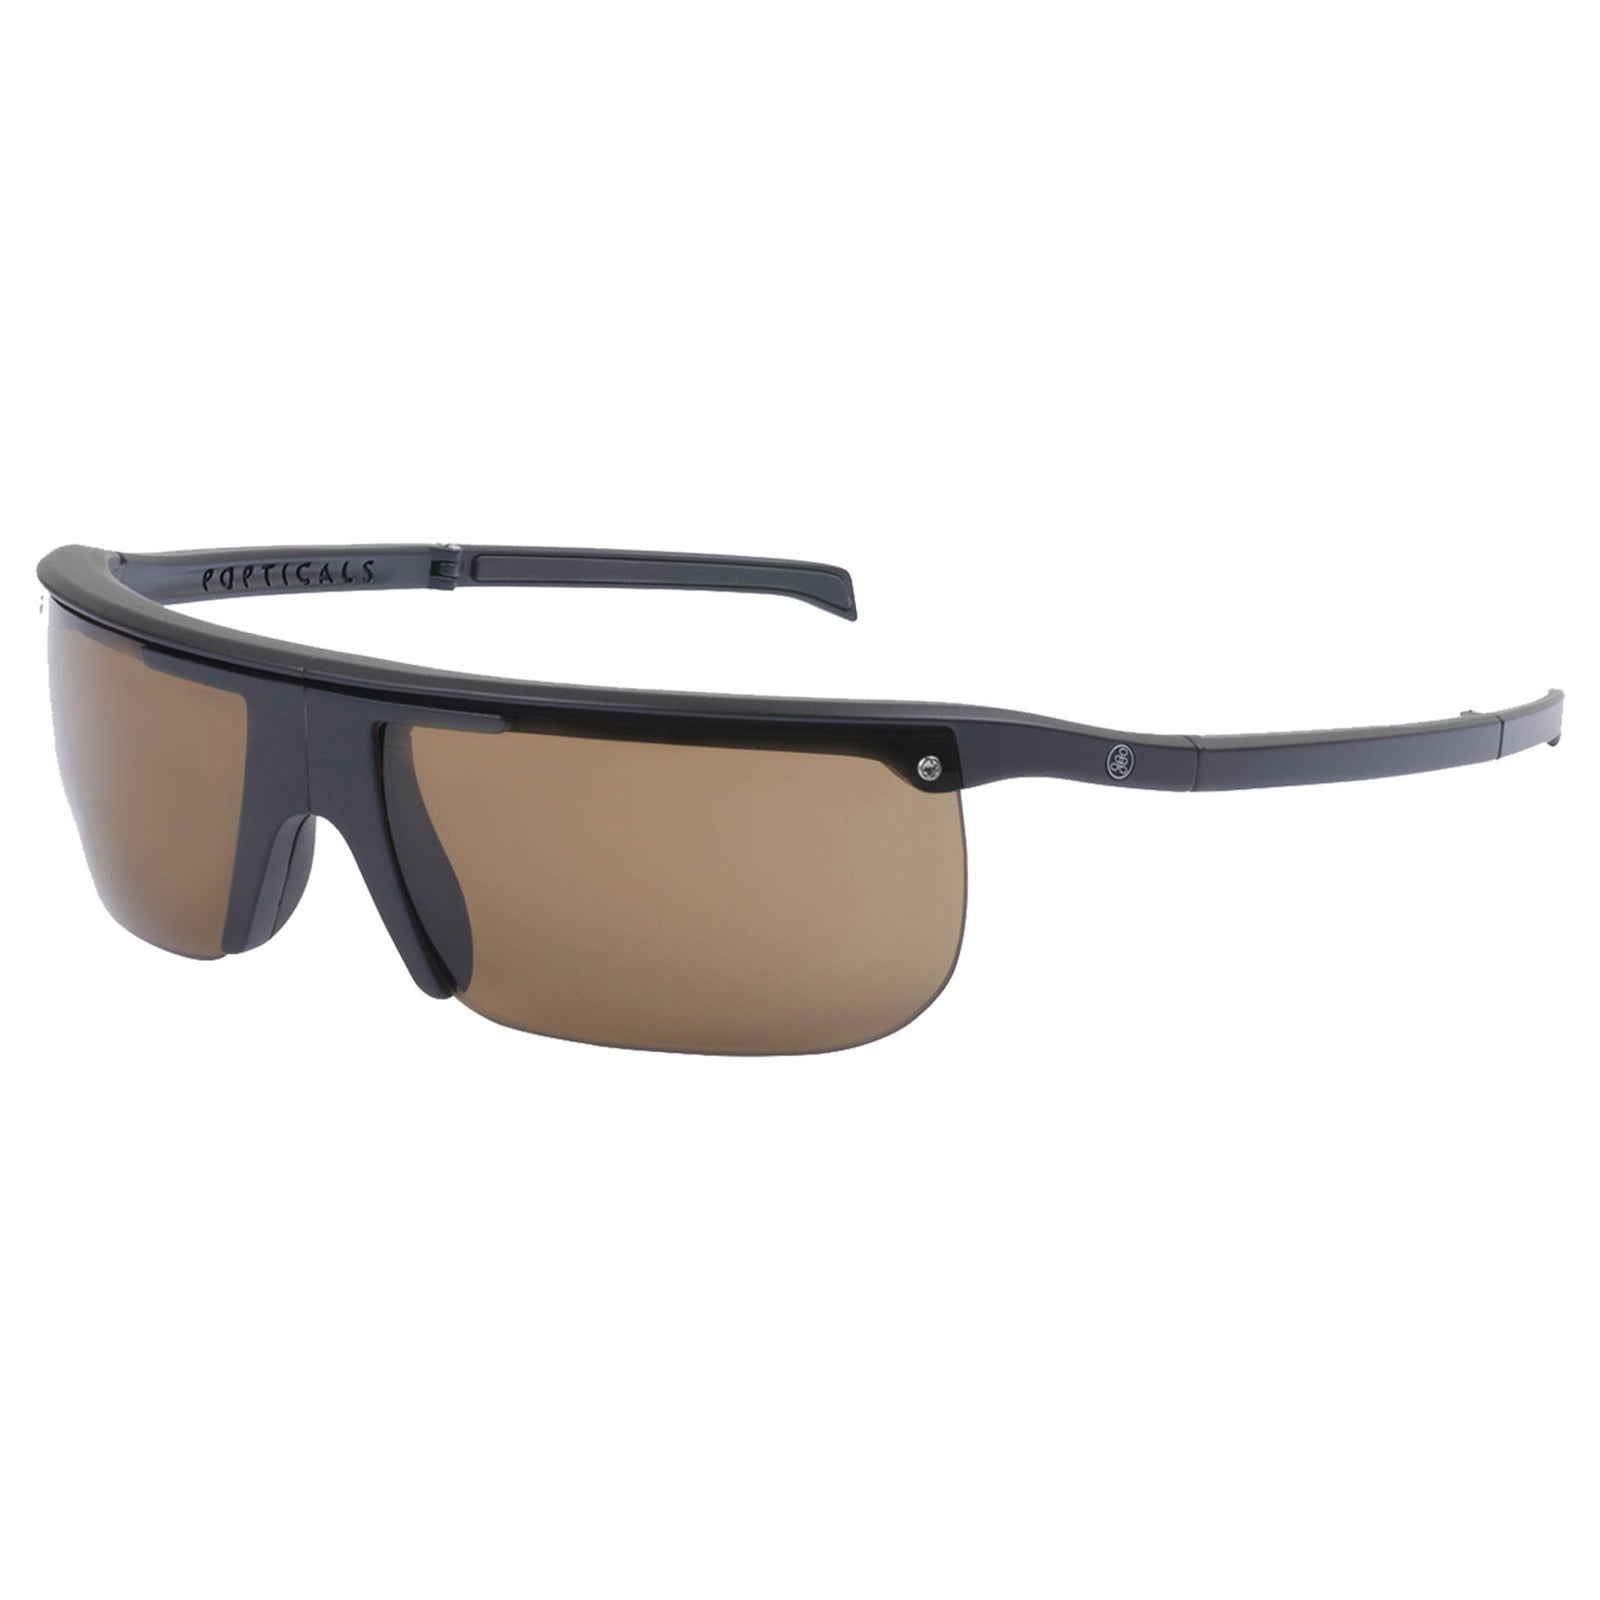 Popticals, Premium Compact Sunglasses, PopArt, 010030-BMNP, Polarized Sunglasses, Matte Black Frame, Brown Lenses, Glam View